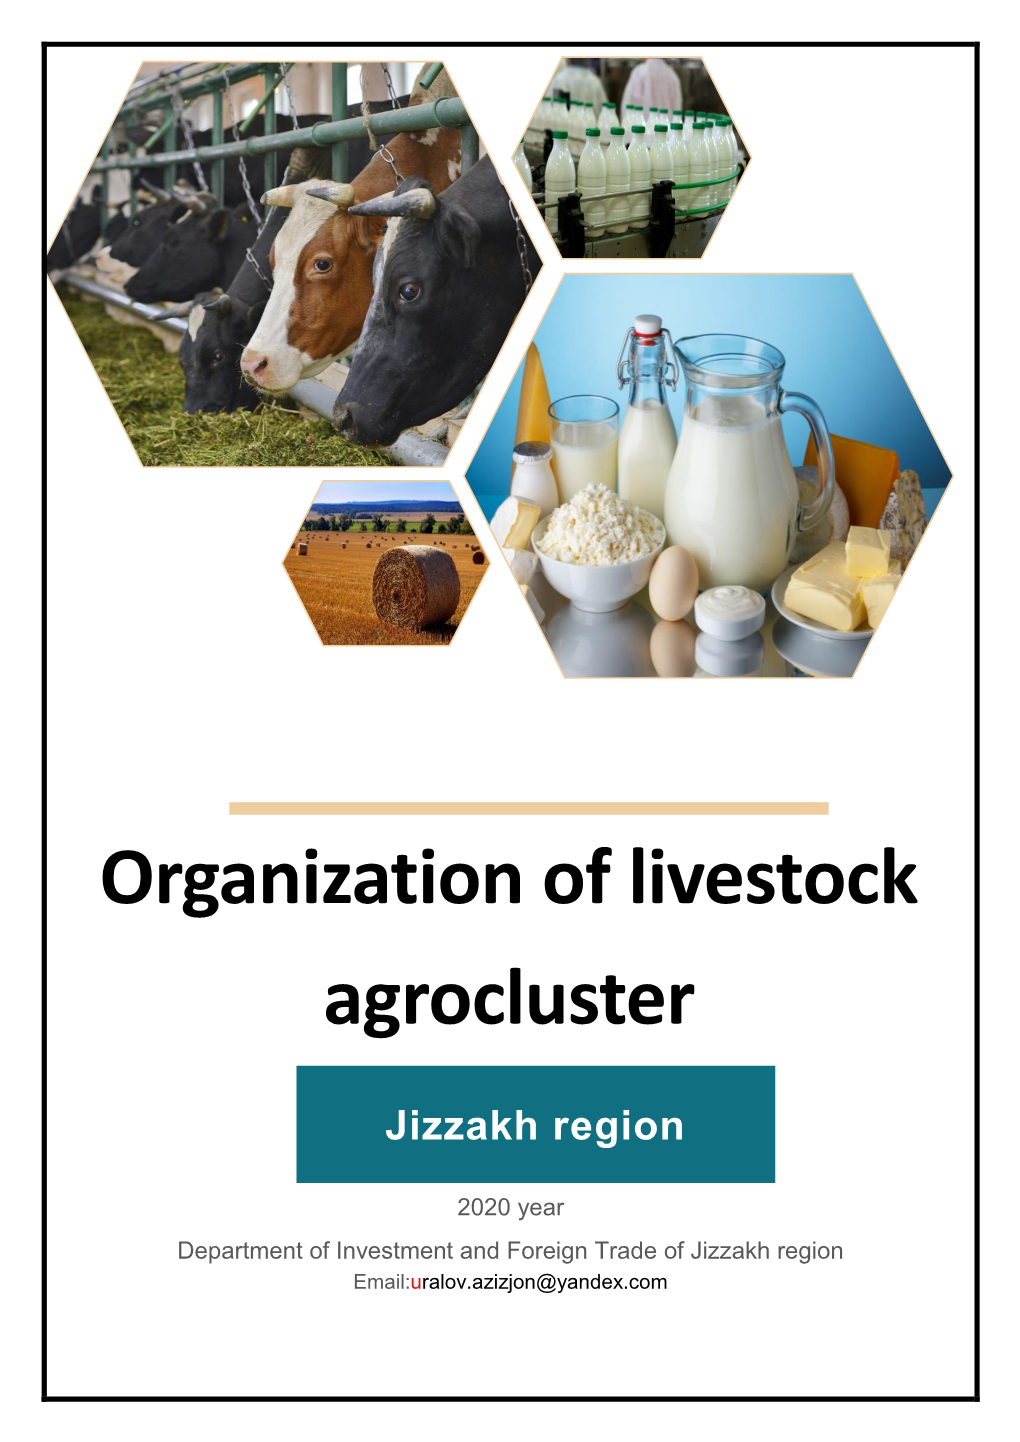 Organization of Livestock Agrocluster